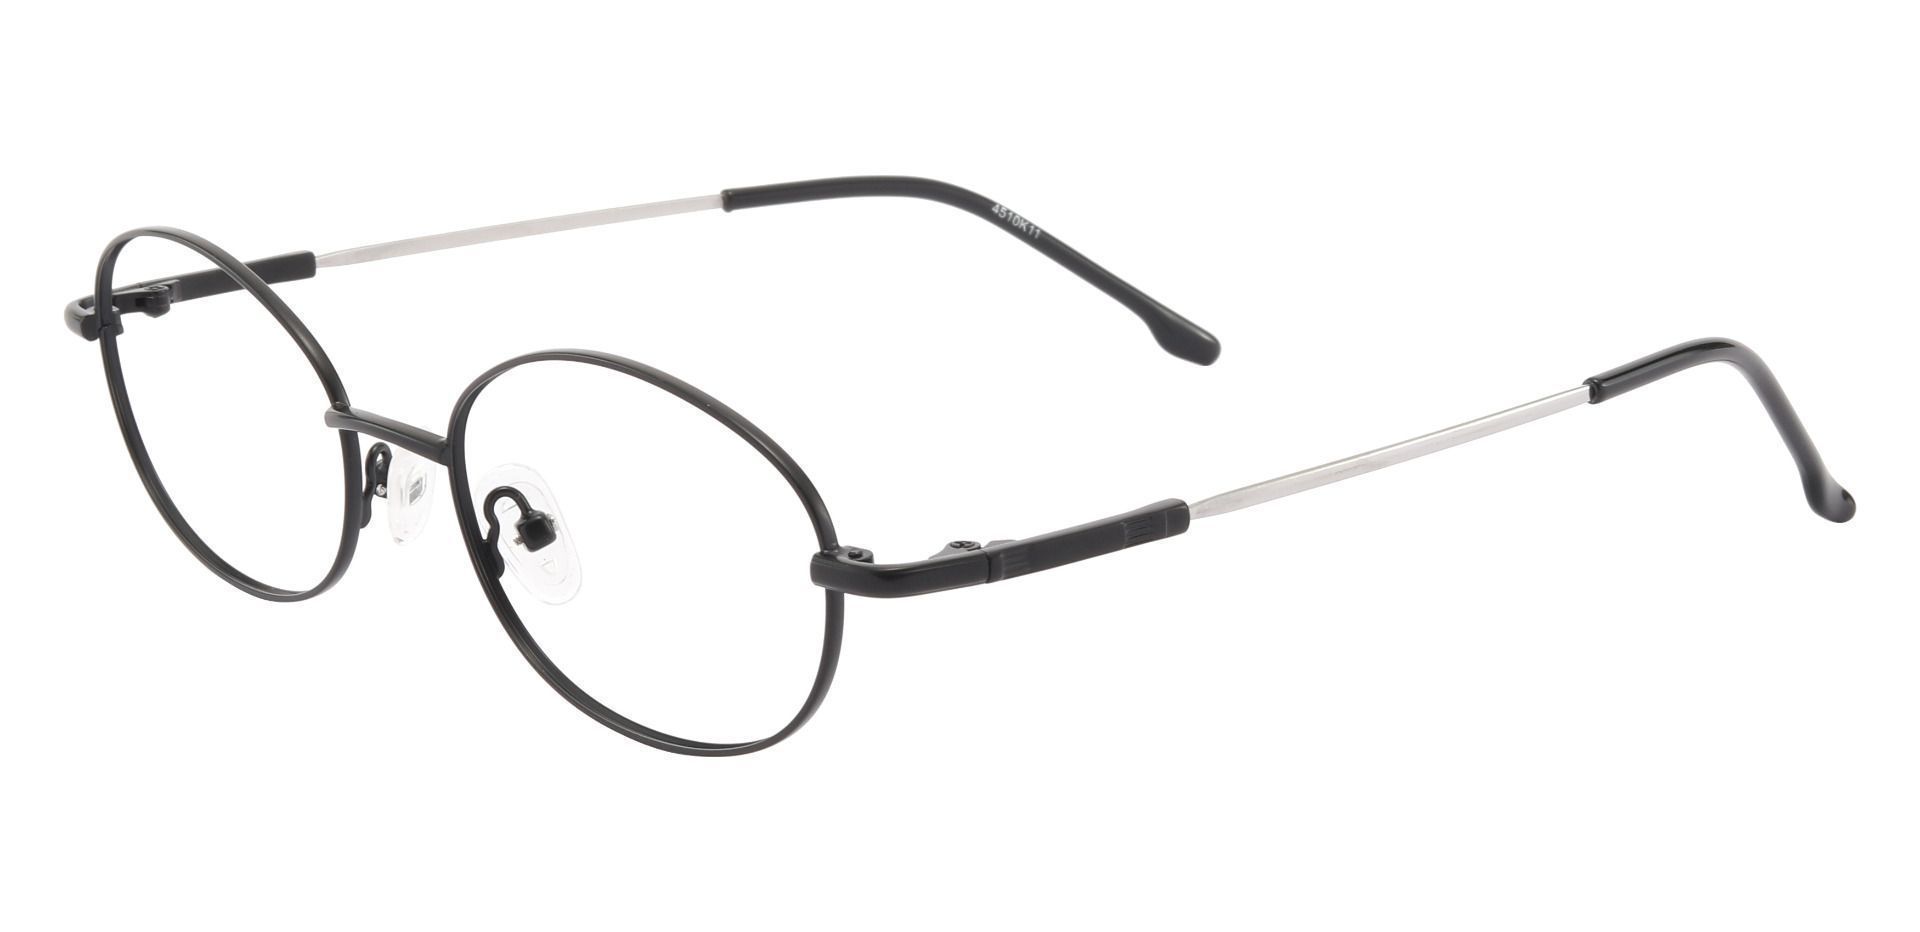 Calera Oval Prescription Glasses - Black | Women's Eyeglasses | Payne ...